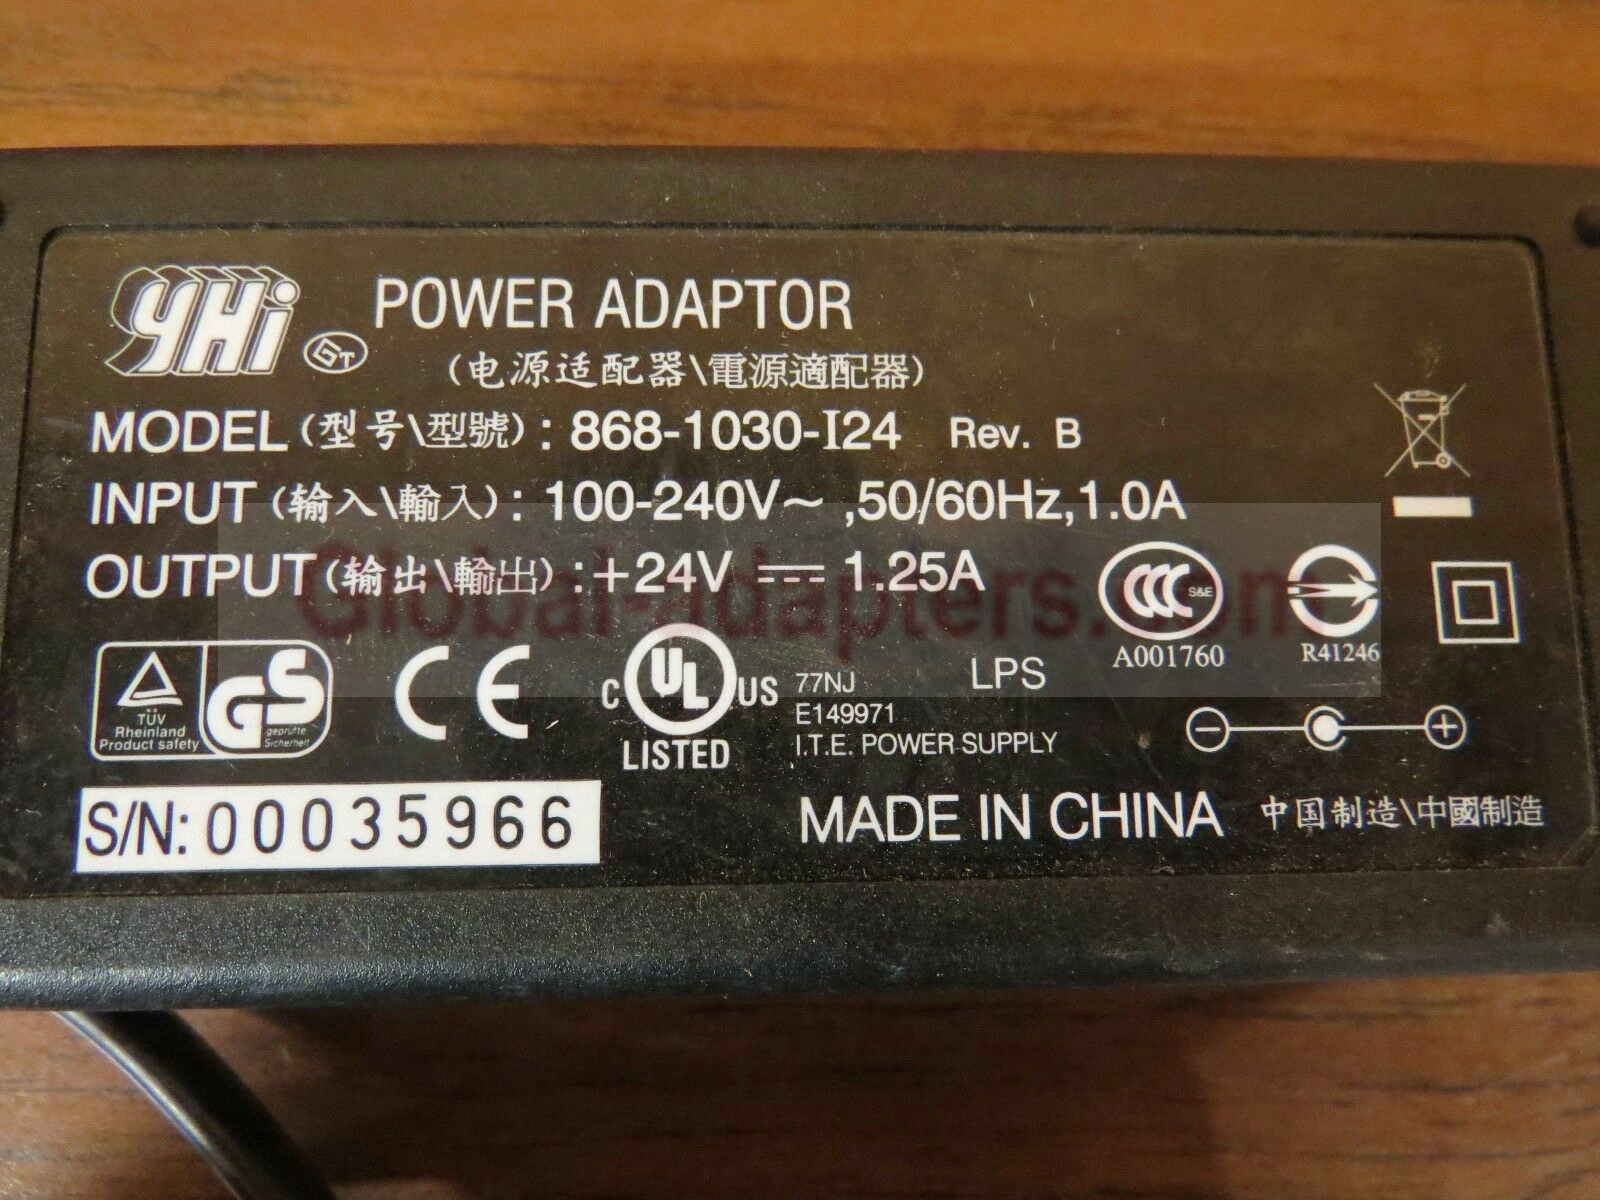 NEW 24V 1.25A YHi 868-1030-I24 AC Power Adapter